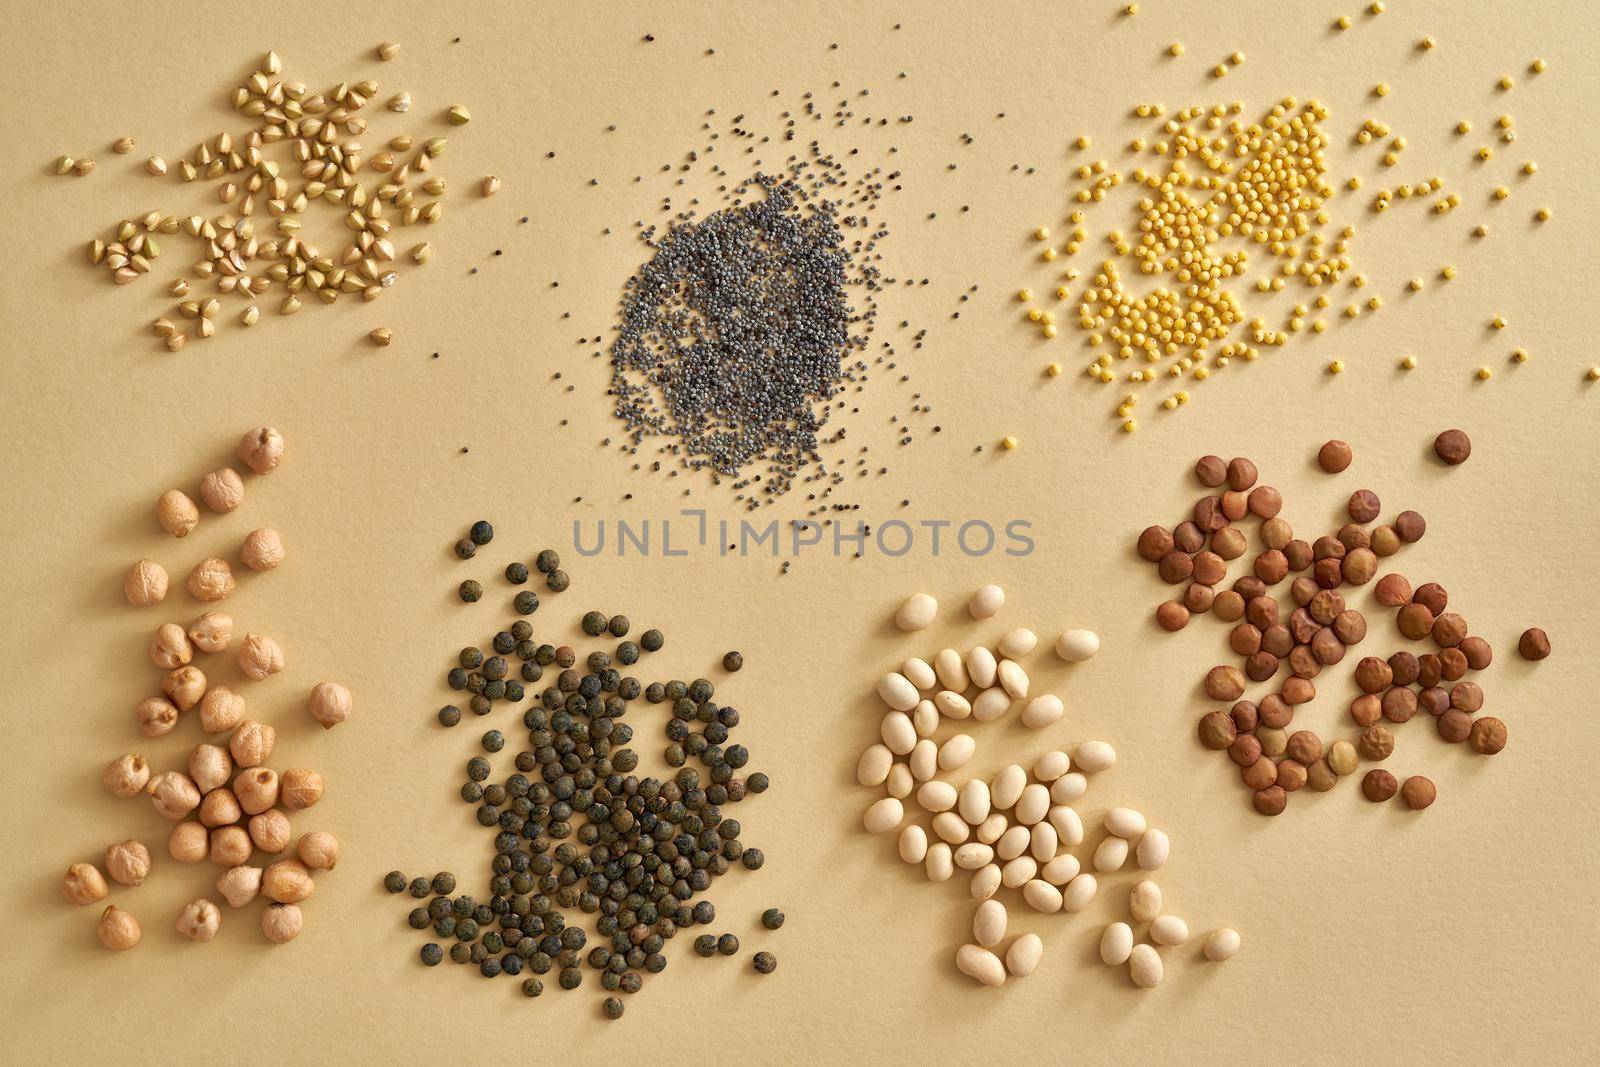 Buckwheat, poppy seeds, millet, chickpeas, lentils and beans - gluten free grains and legumes by madeleine_steinbach